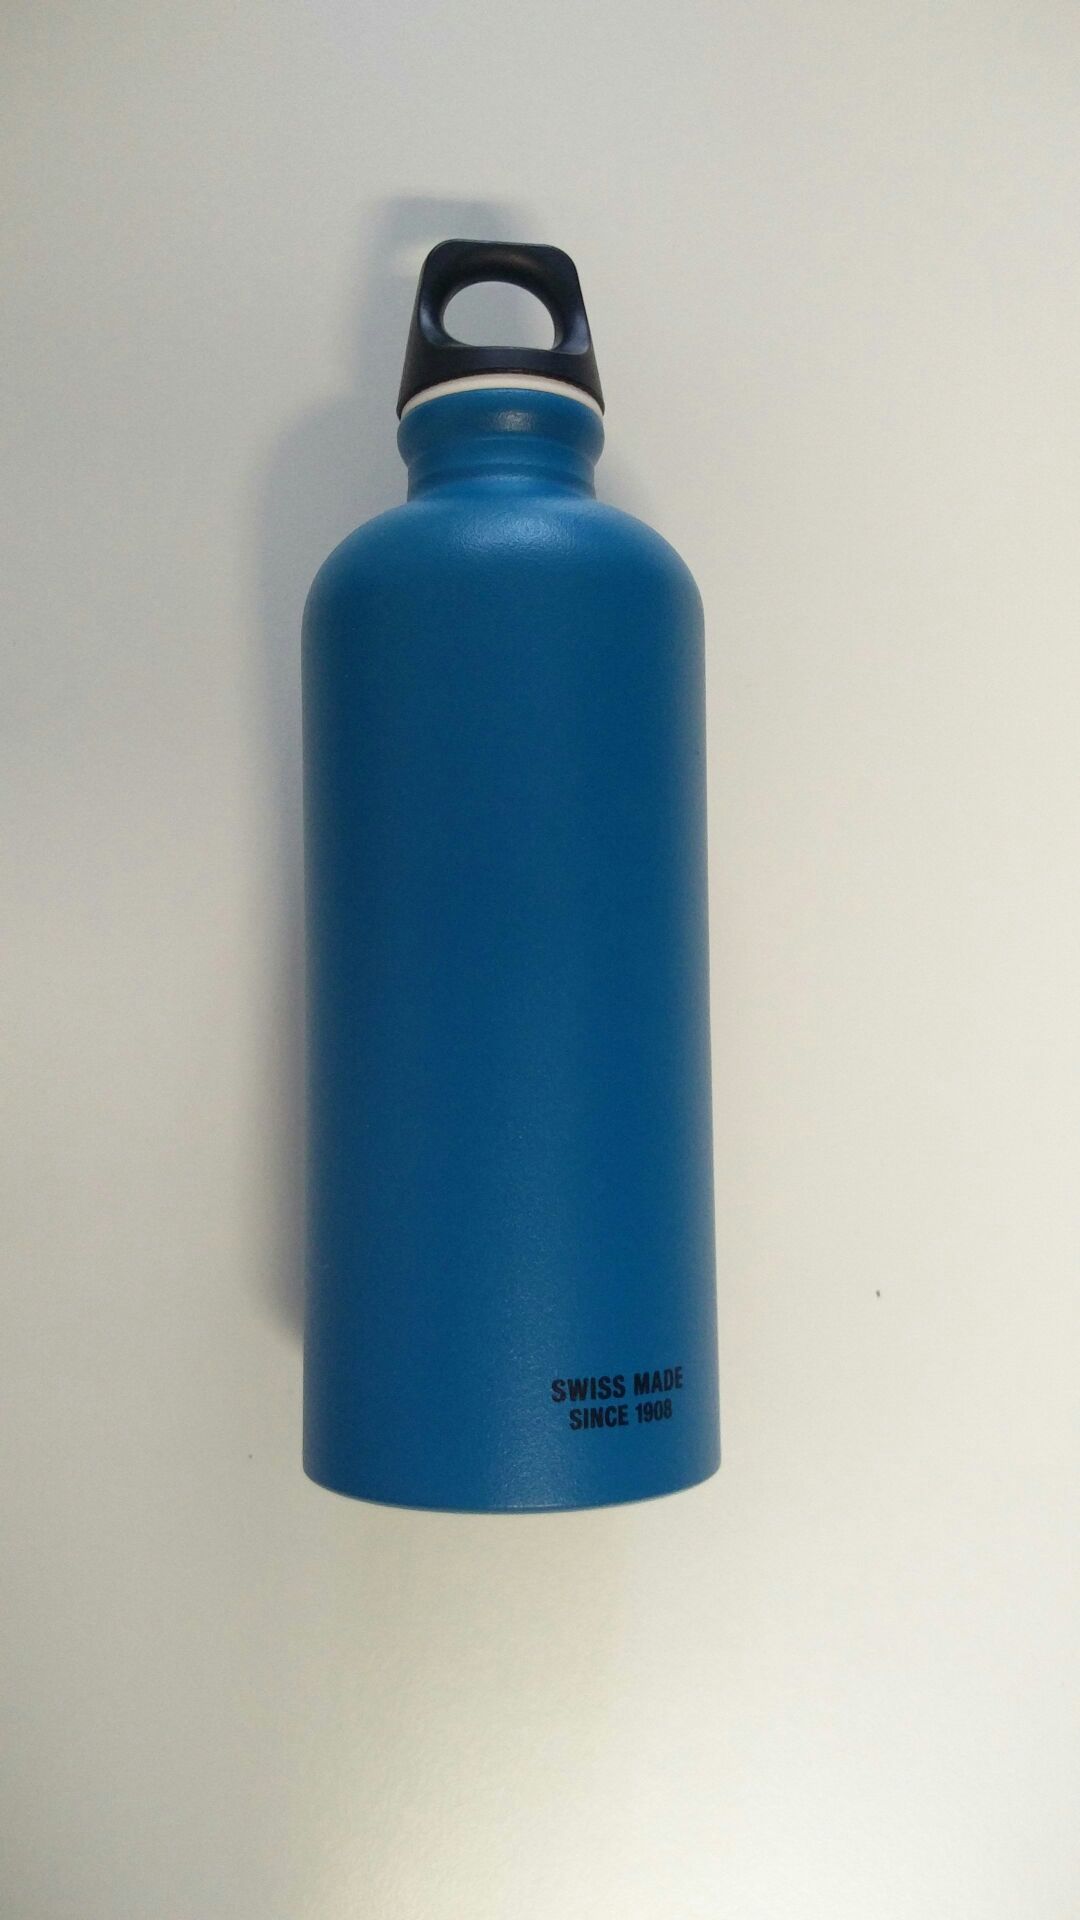 SIGG bottle from 2018, blue